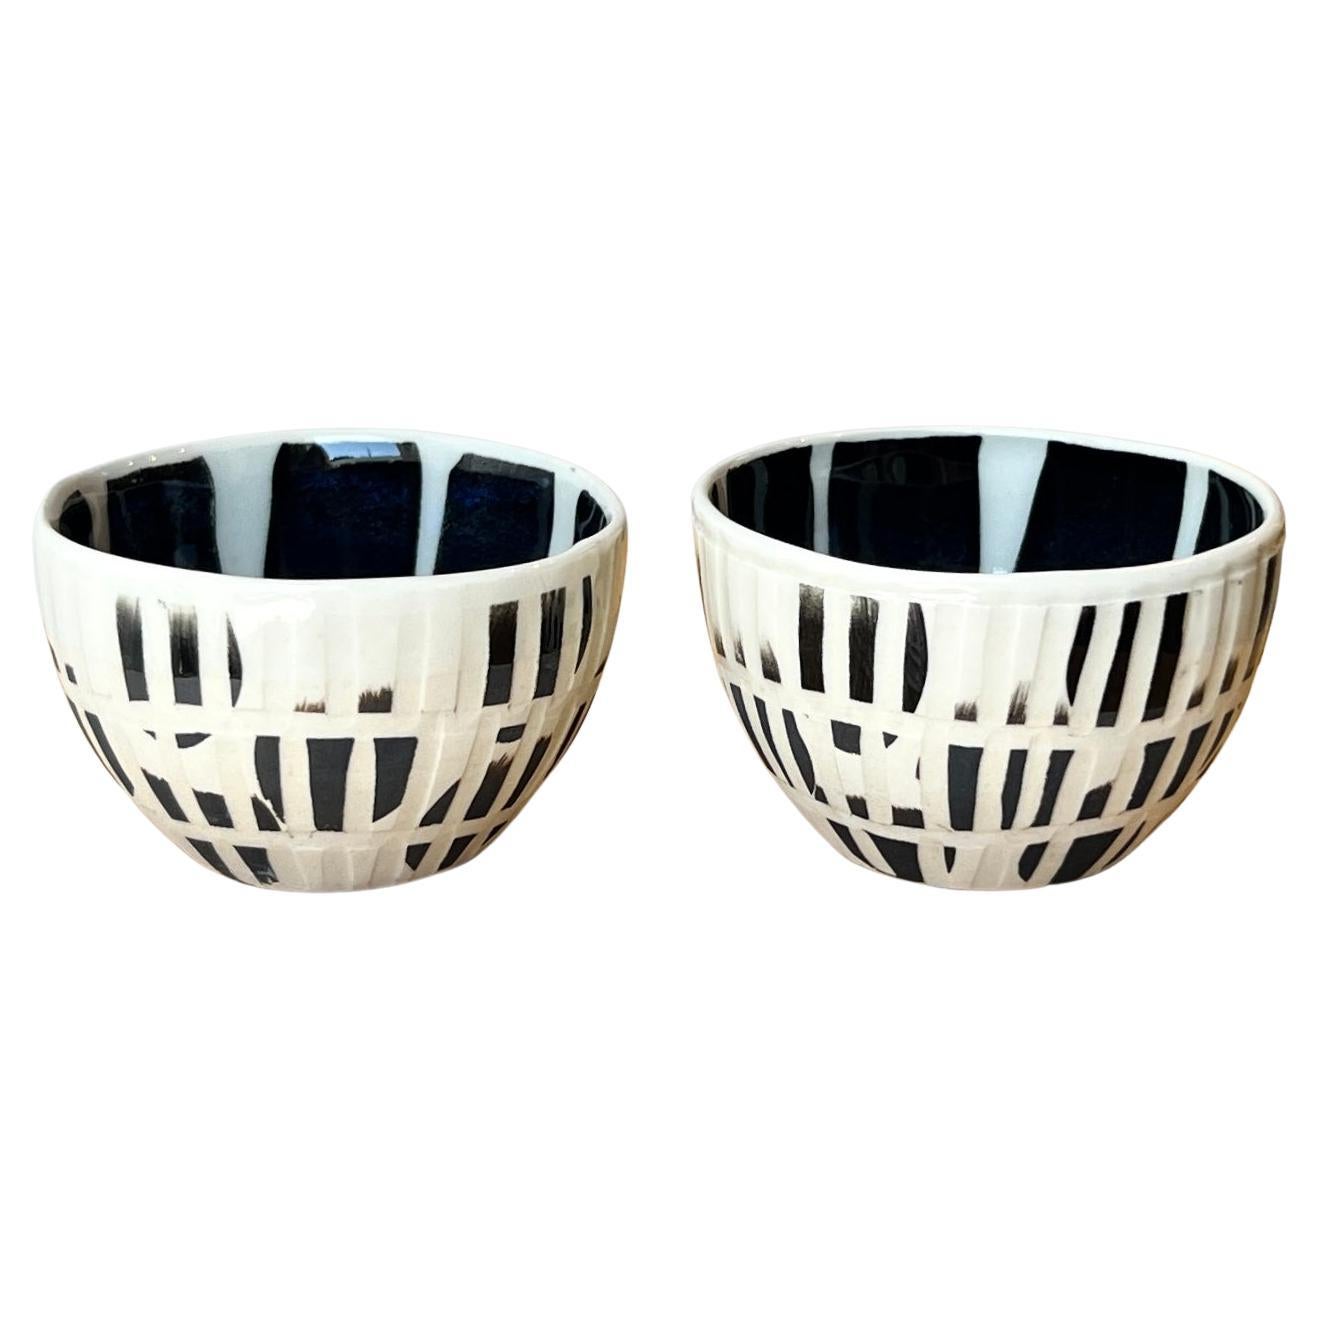 Celia Handmade Whimsical Ceramic Teacups, set of 2 from Portugal